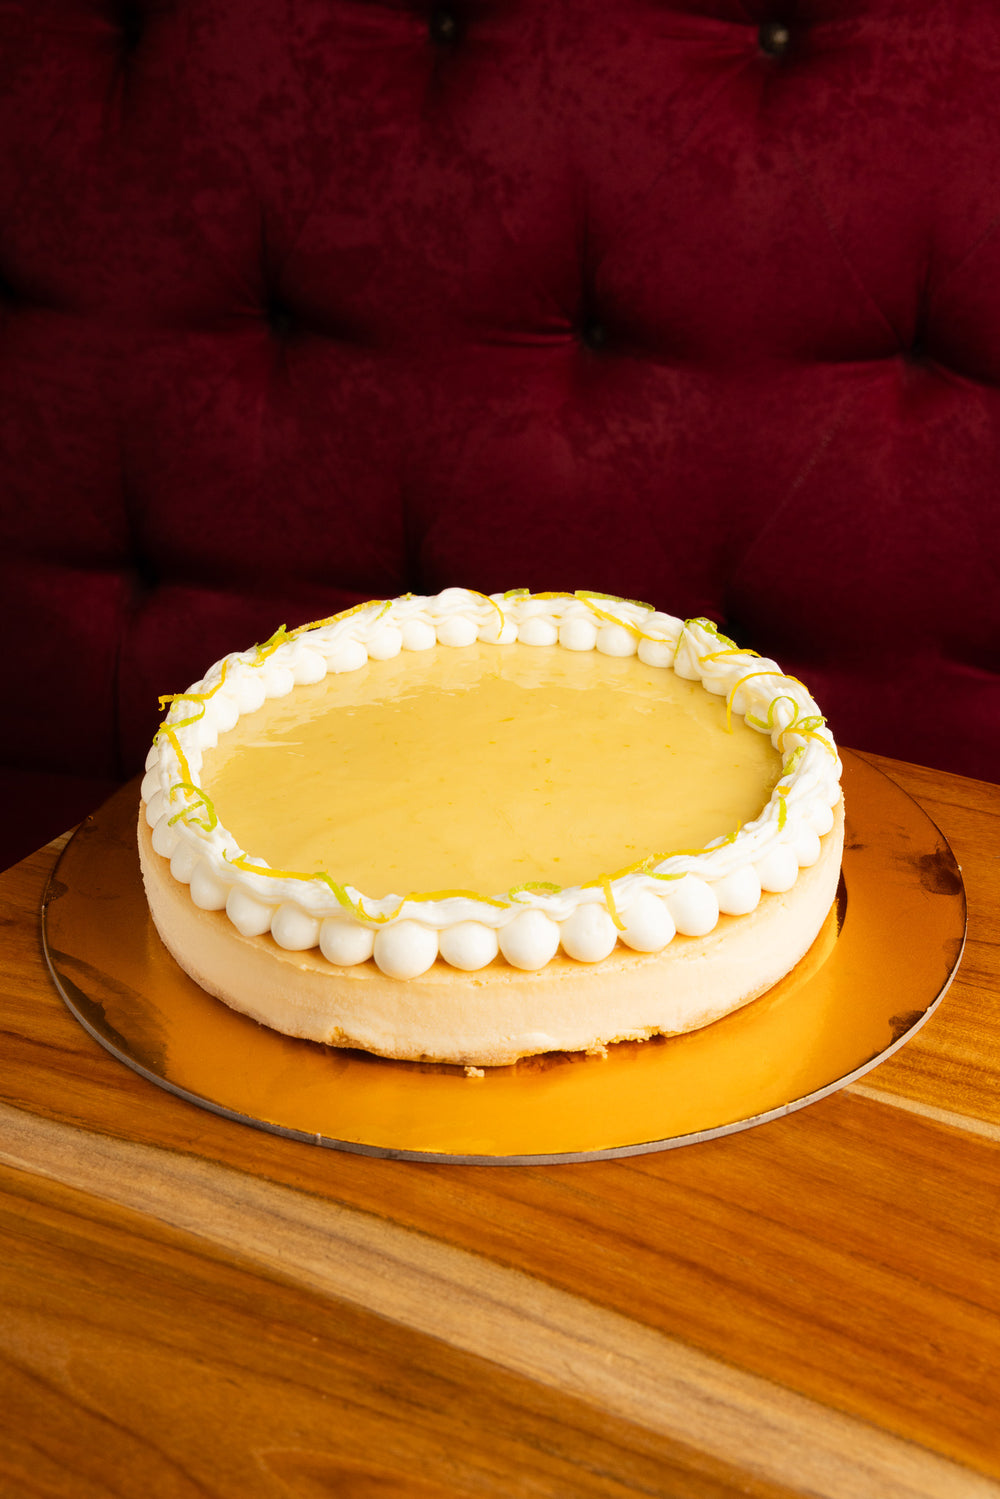 Large cheesecake